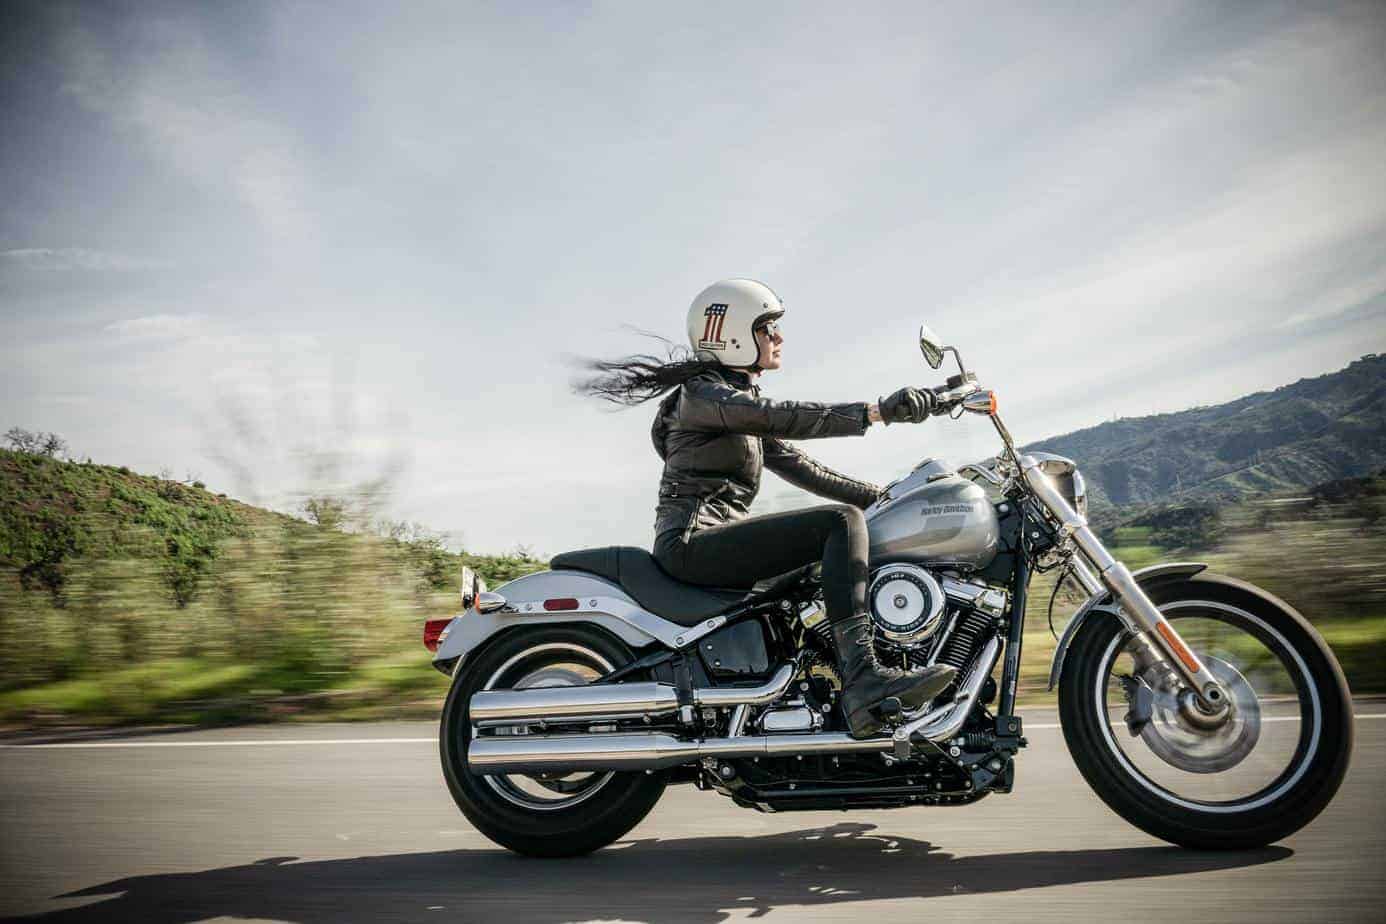 A woman wearing leather leggings on a motorbike